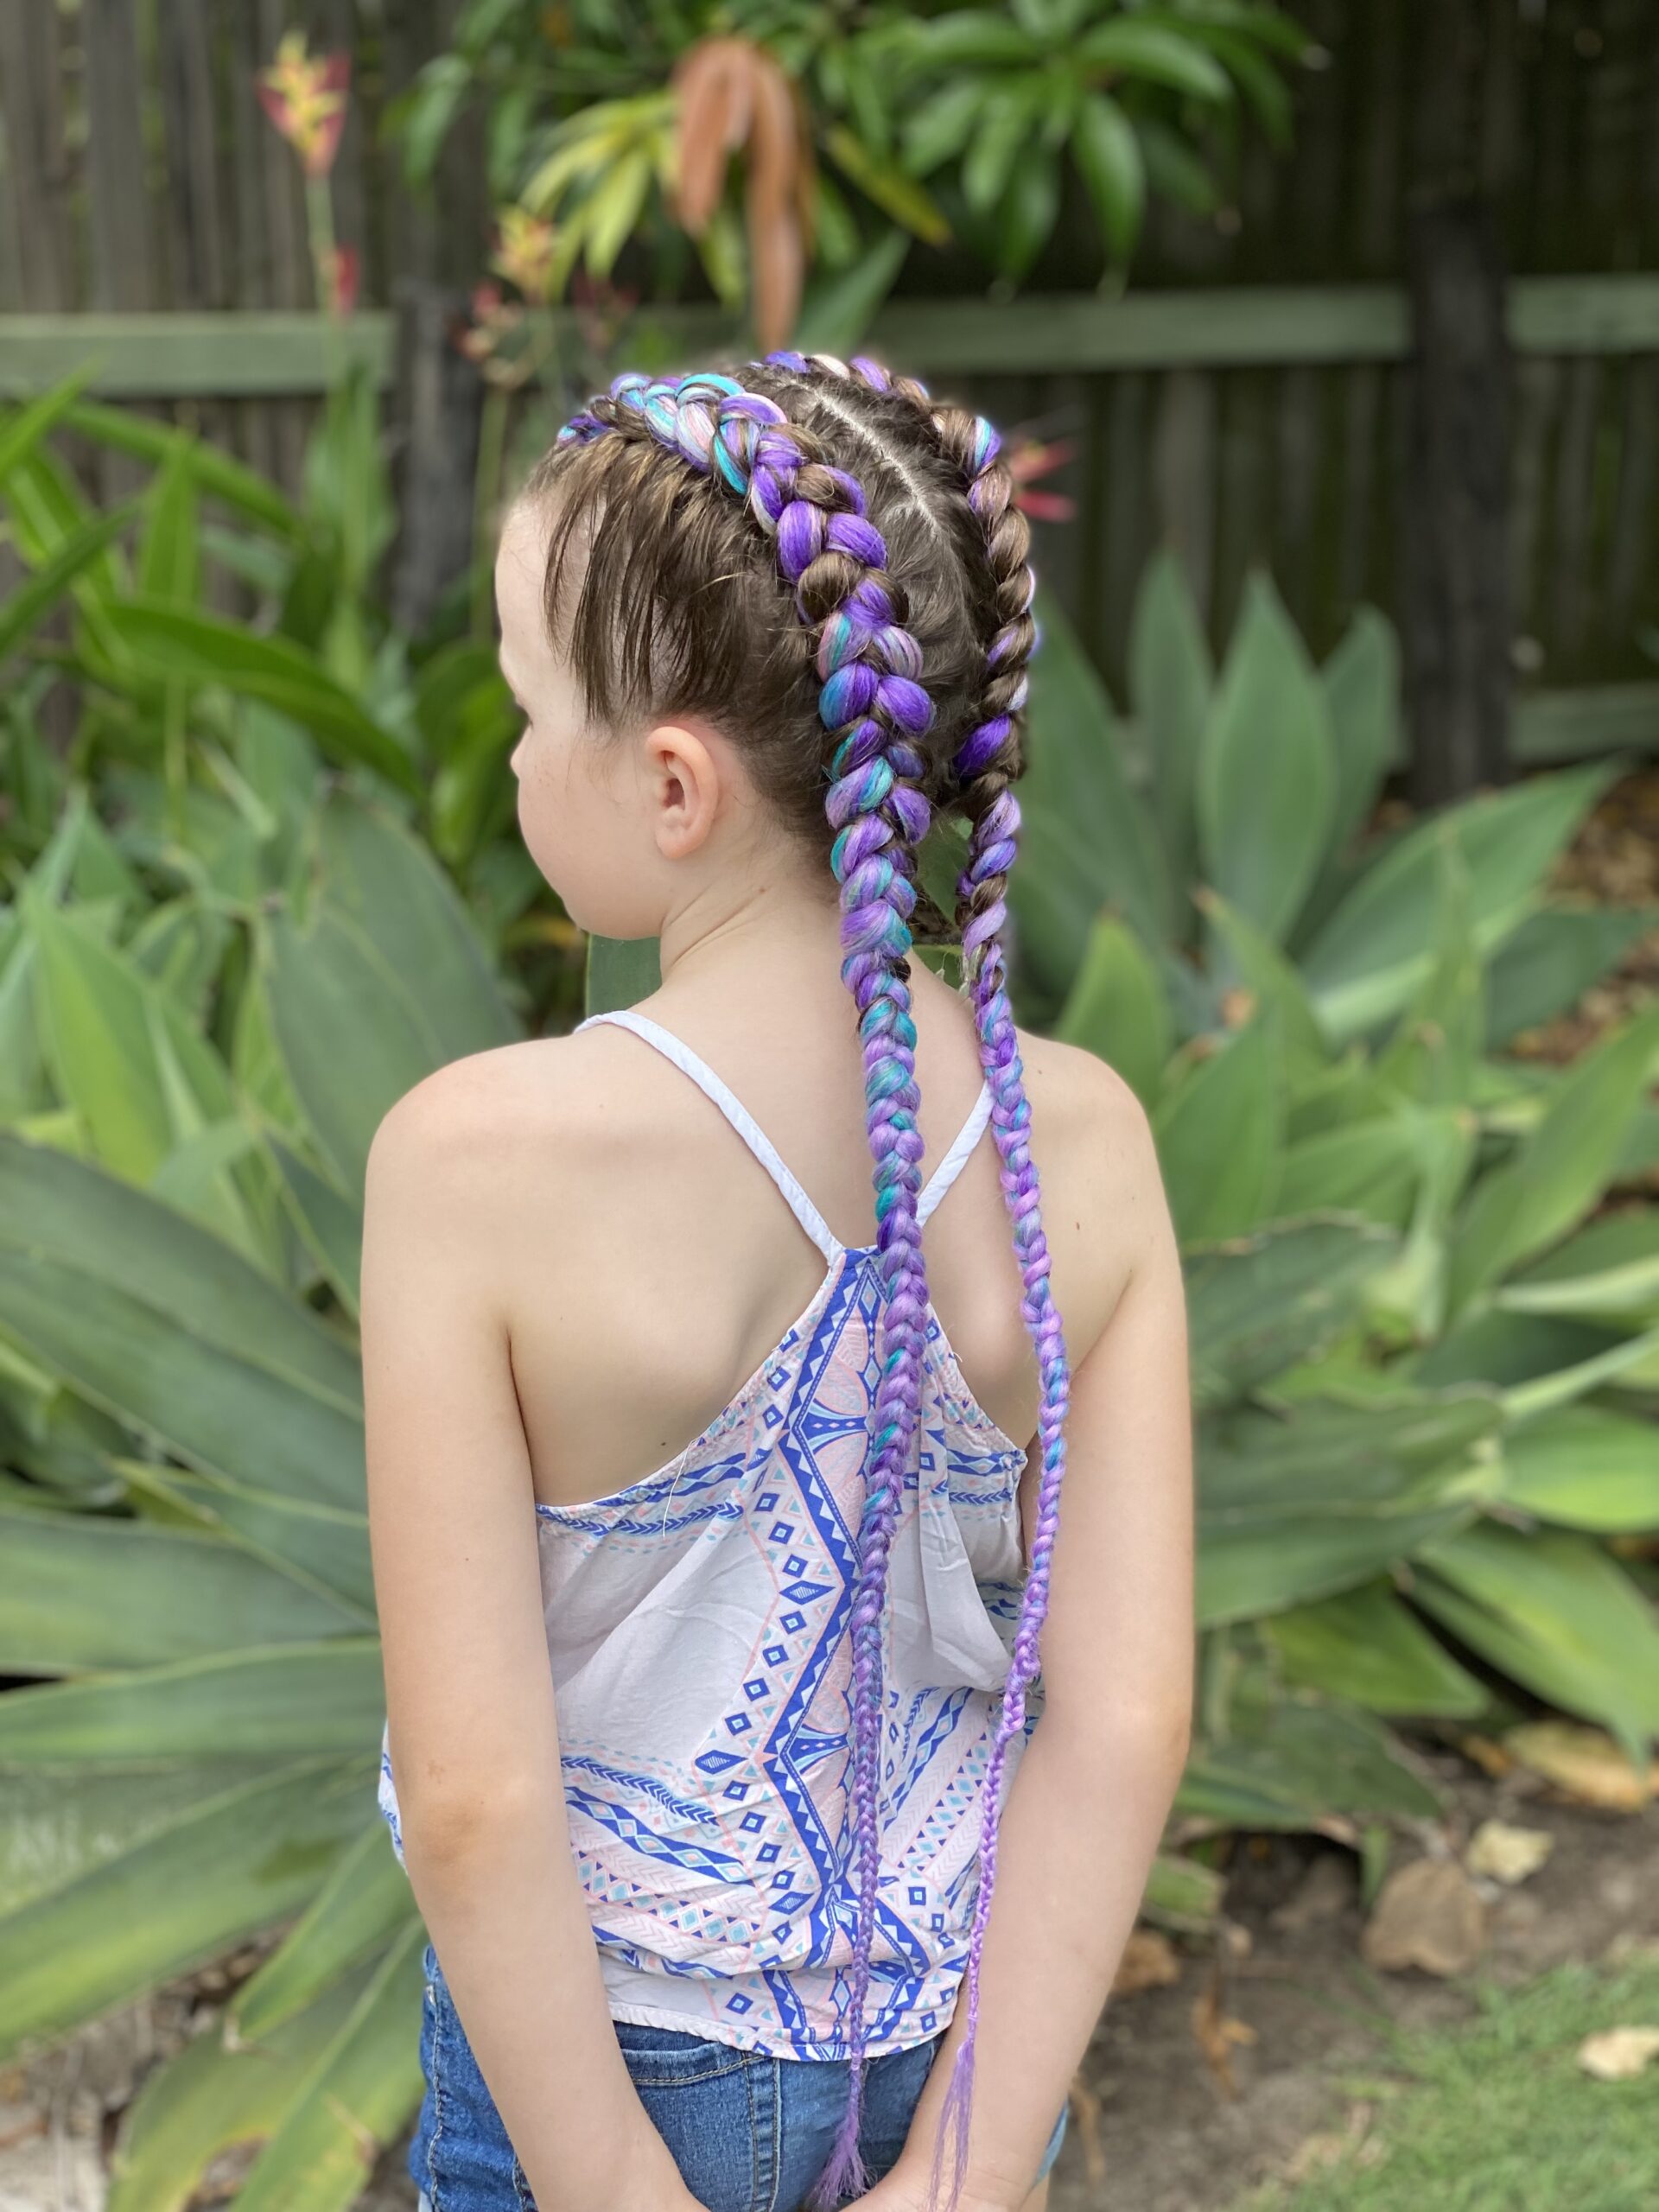 Girl with purple hair braid